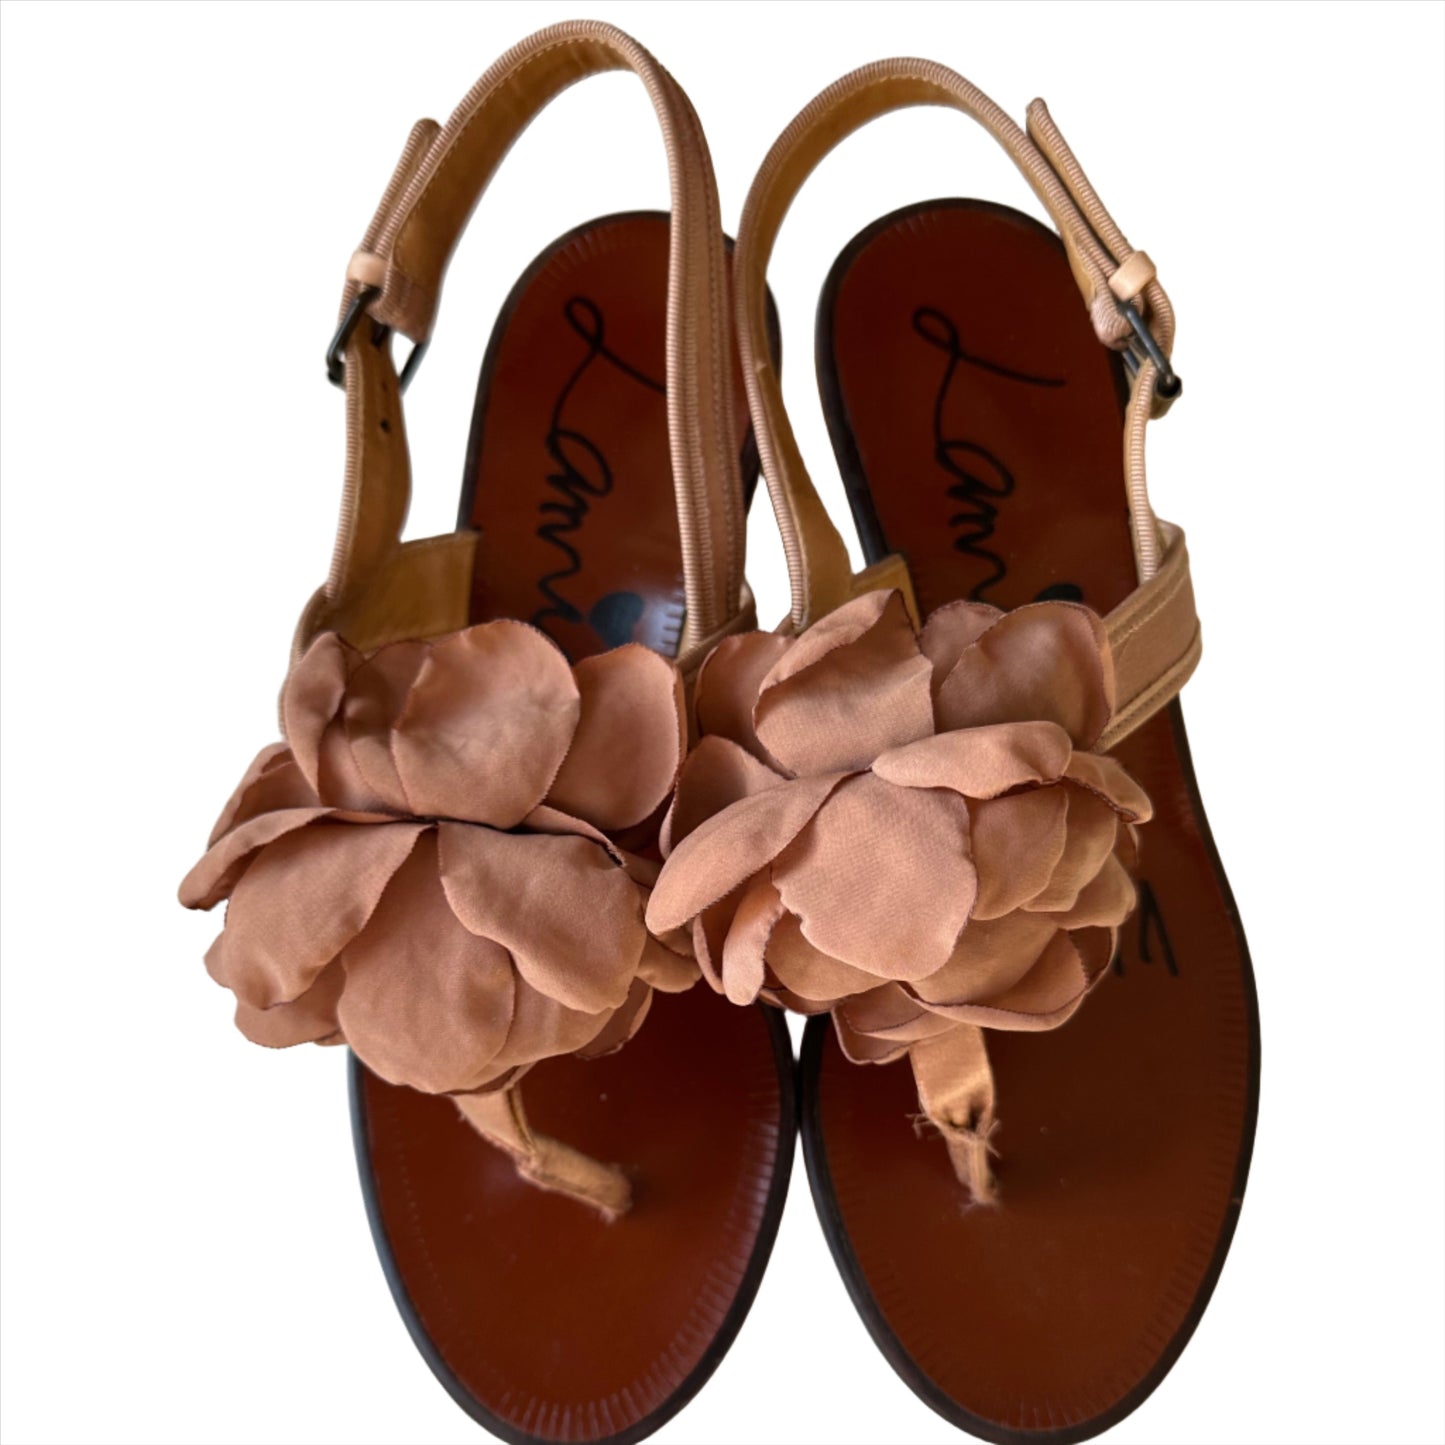 Lanvin Blush Iconic Flower Sandals